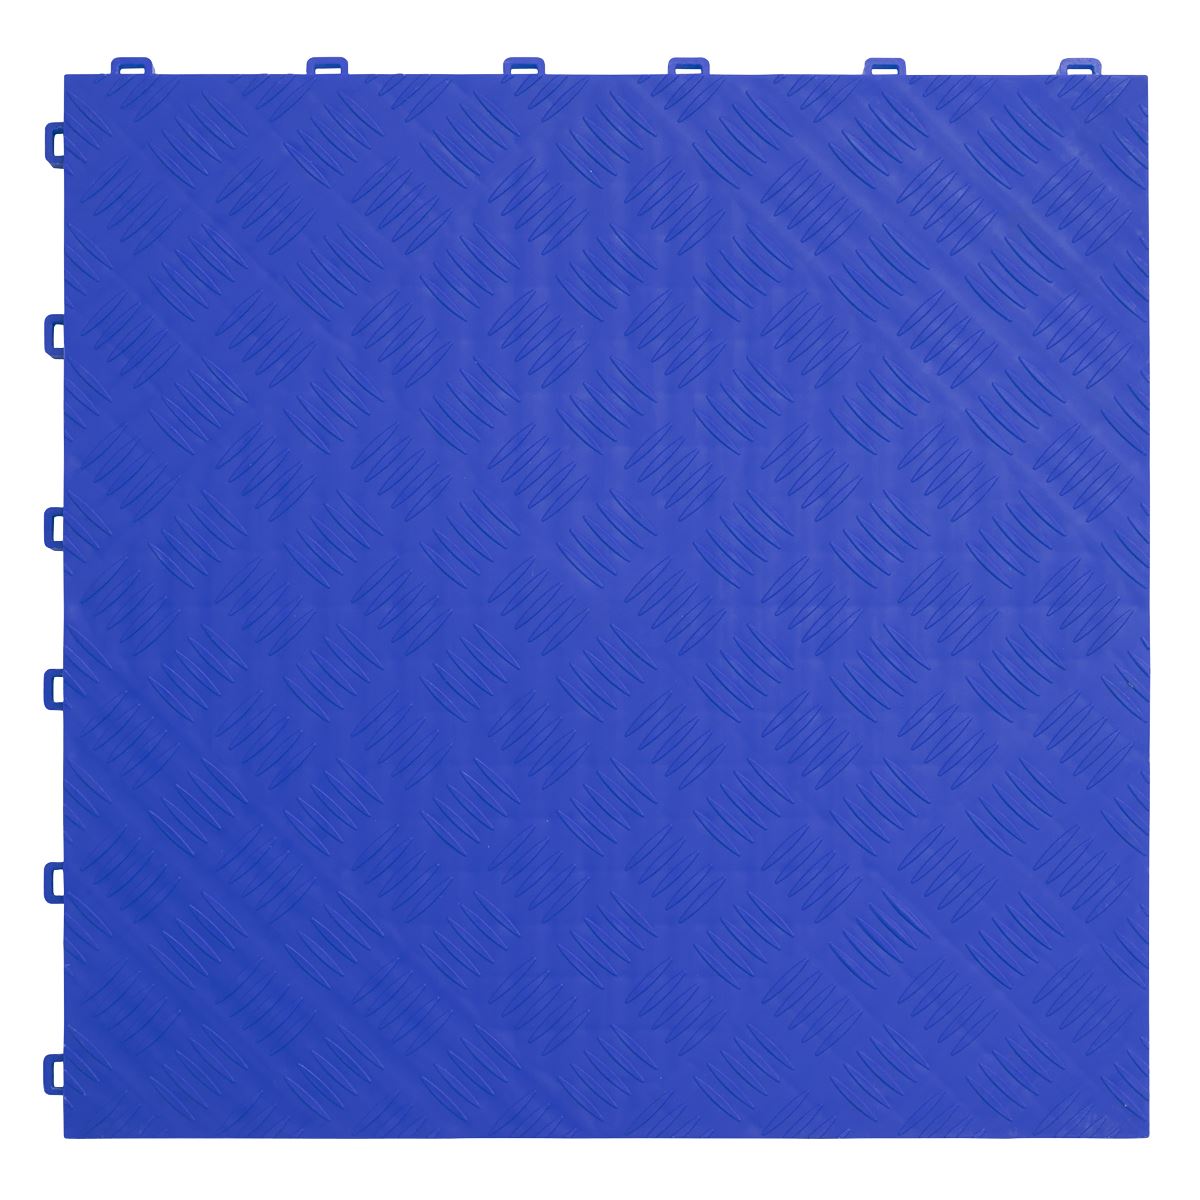 Sealey Polypropylene Floor Tile 400 x 400mm - Blue Treadplate - Pack of 9